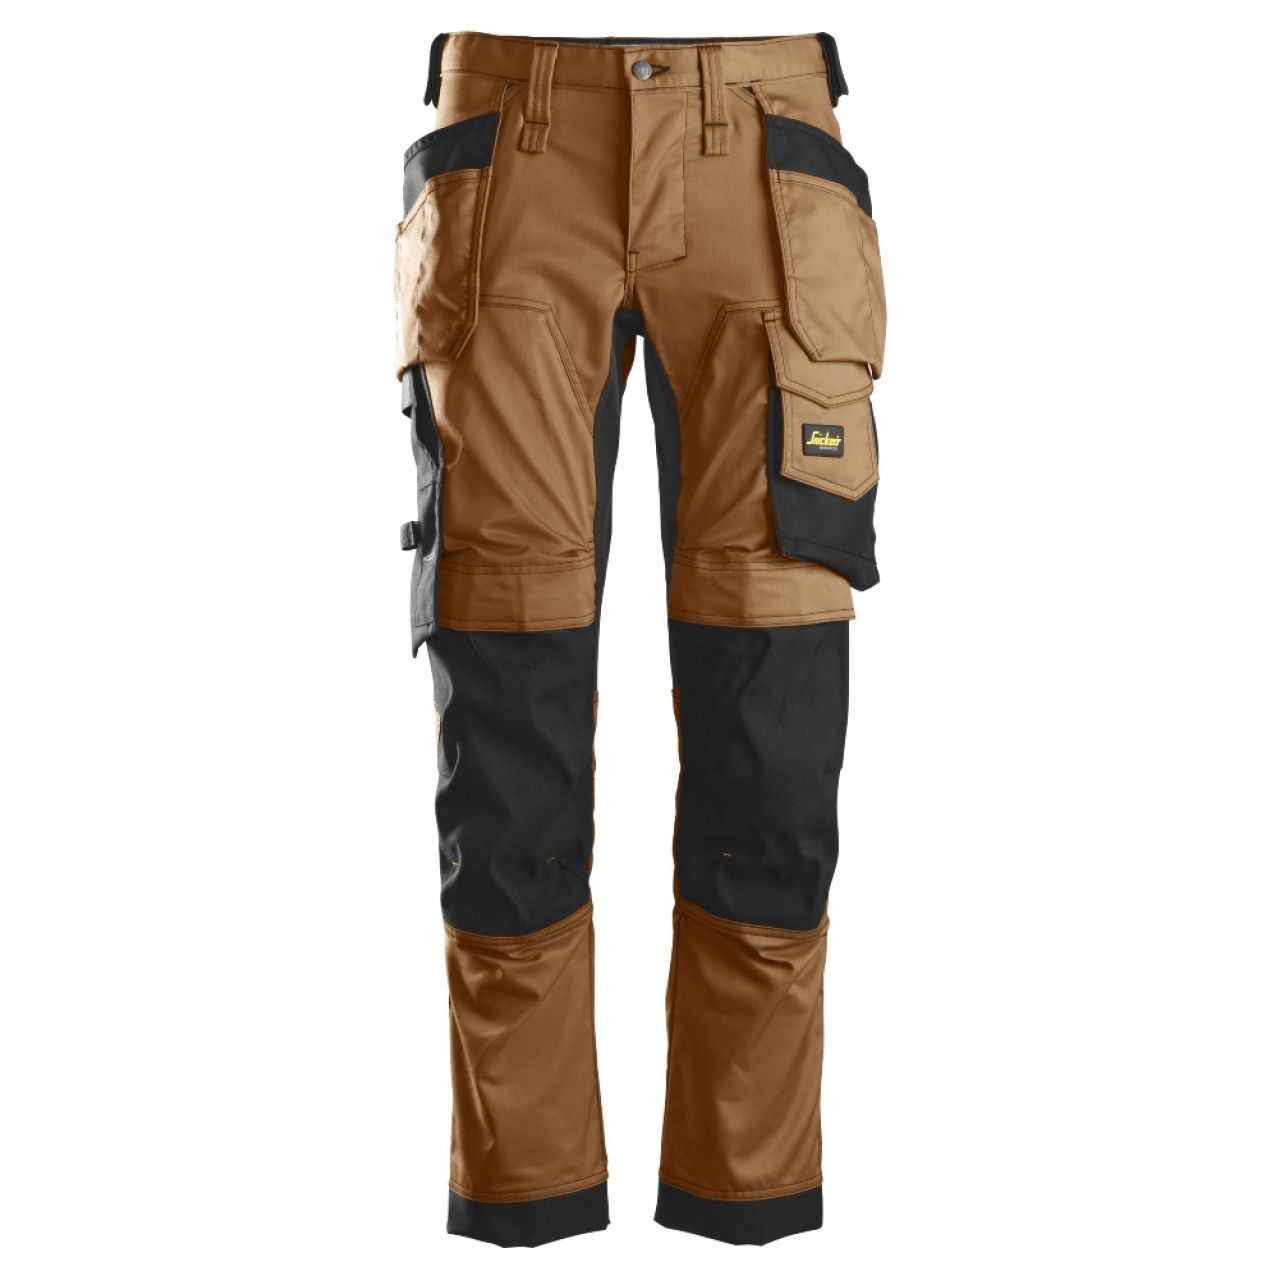 6241 Pantalones largos de trabajo elásticos con bolsillos flotantes AllroundWork marron-negro talla 208